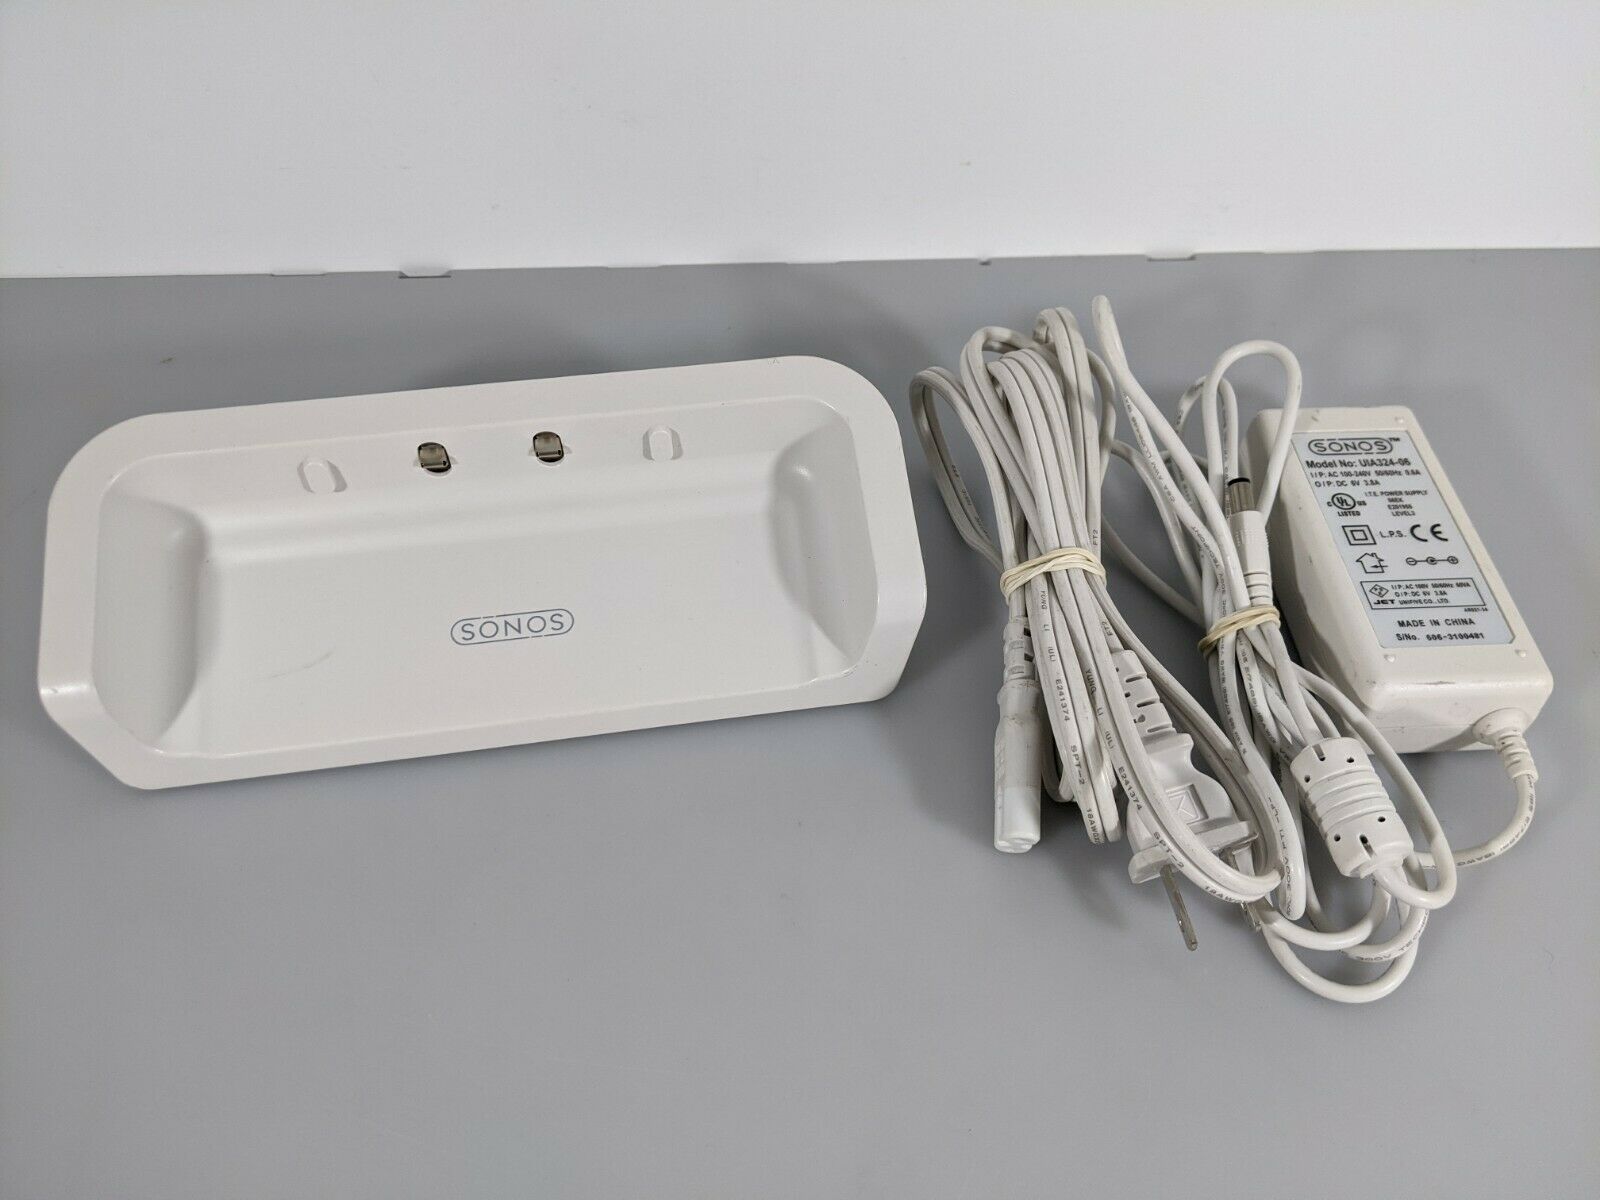 Original Genuine Sonos 0615 DOCK AC adapter Power Supply UIA324-06 TESTED charger Brand: Sonos Type: Audio Dock ac